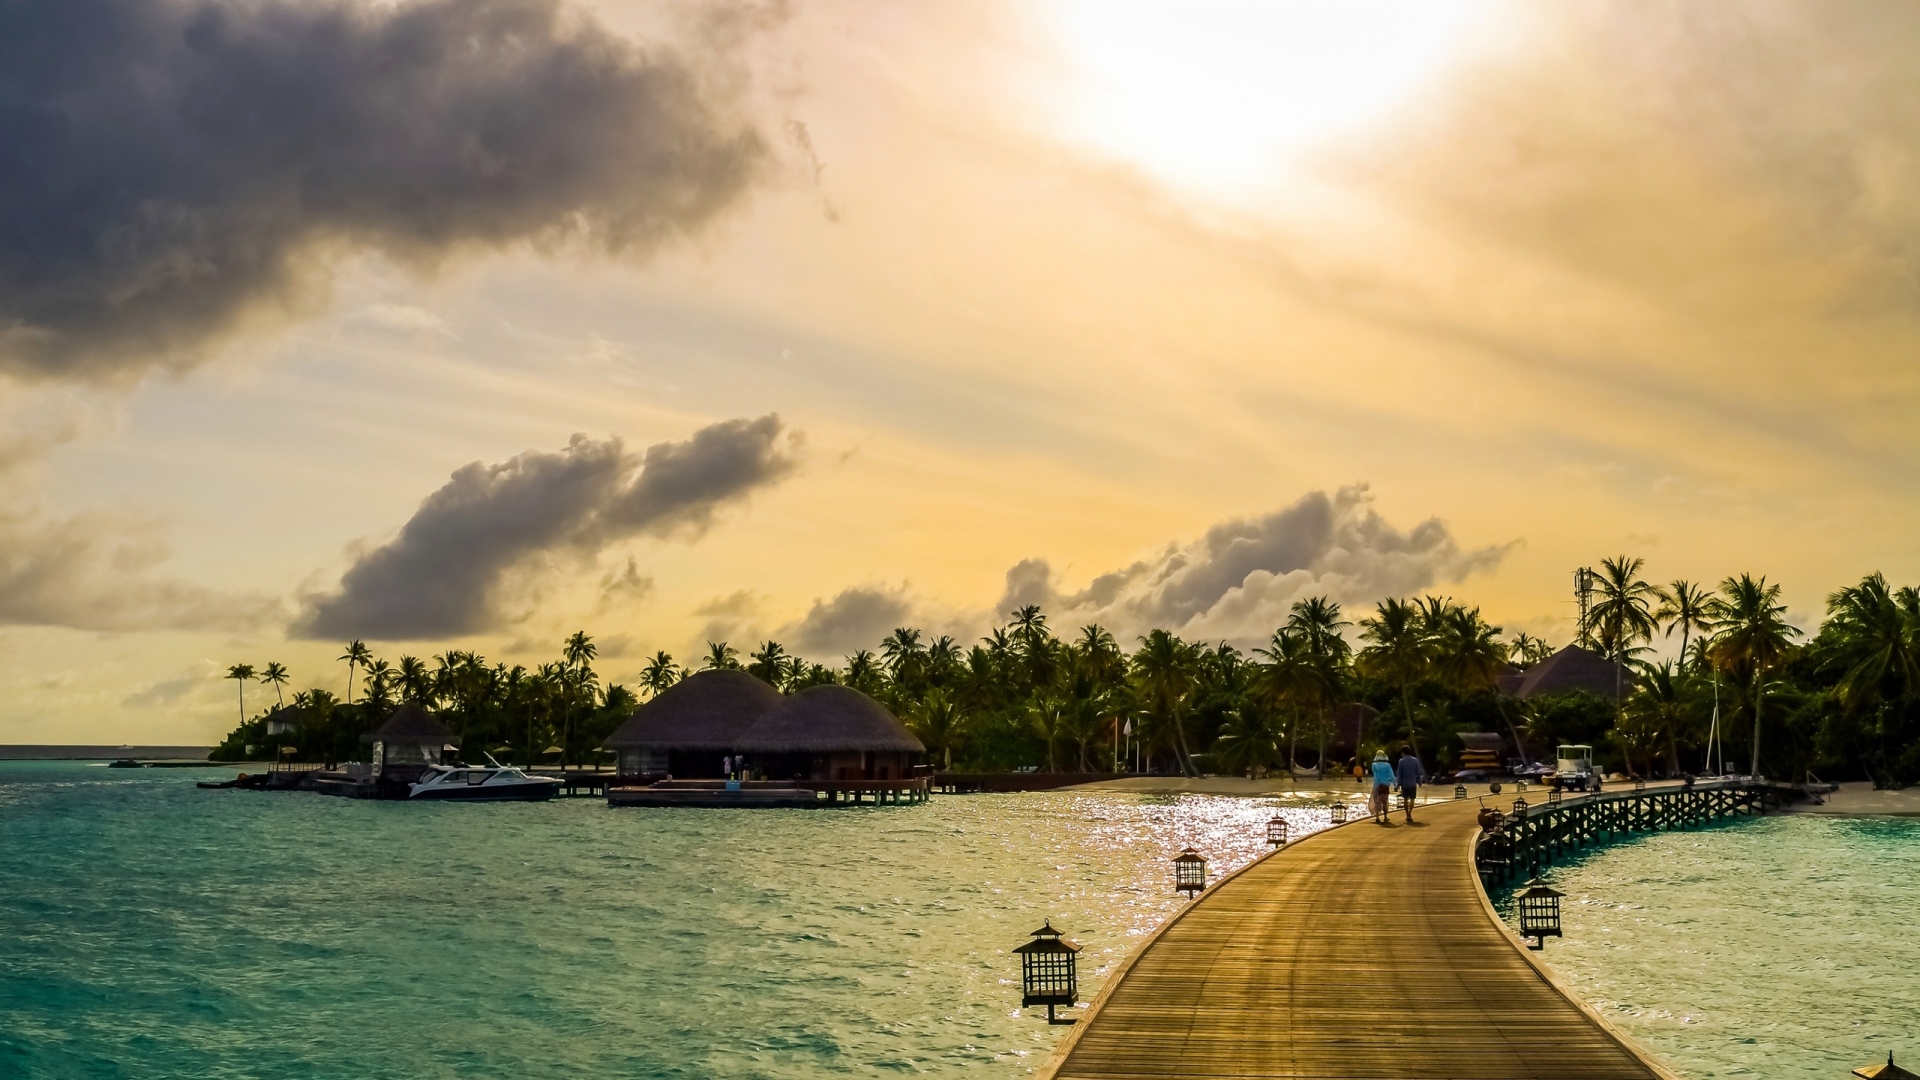 Exotic Maldives Beach for 1920 x 1080 HDTV 1080p resolution